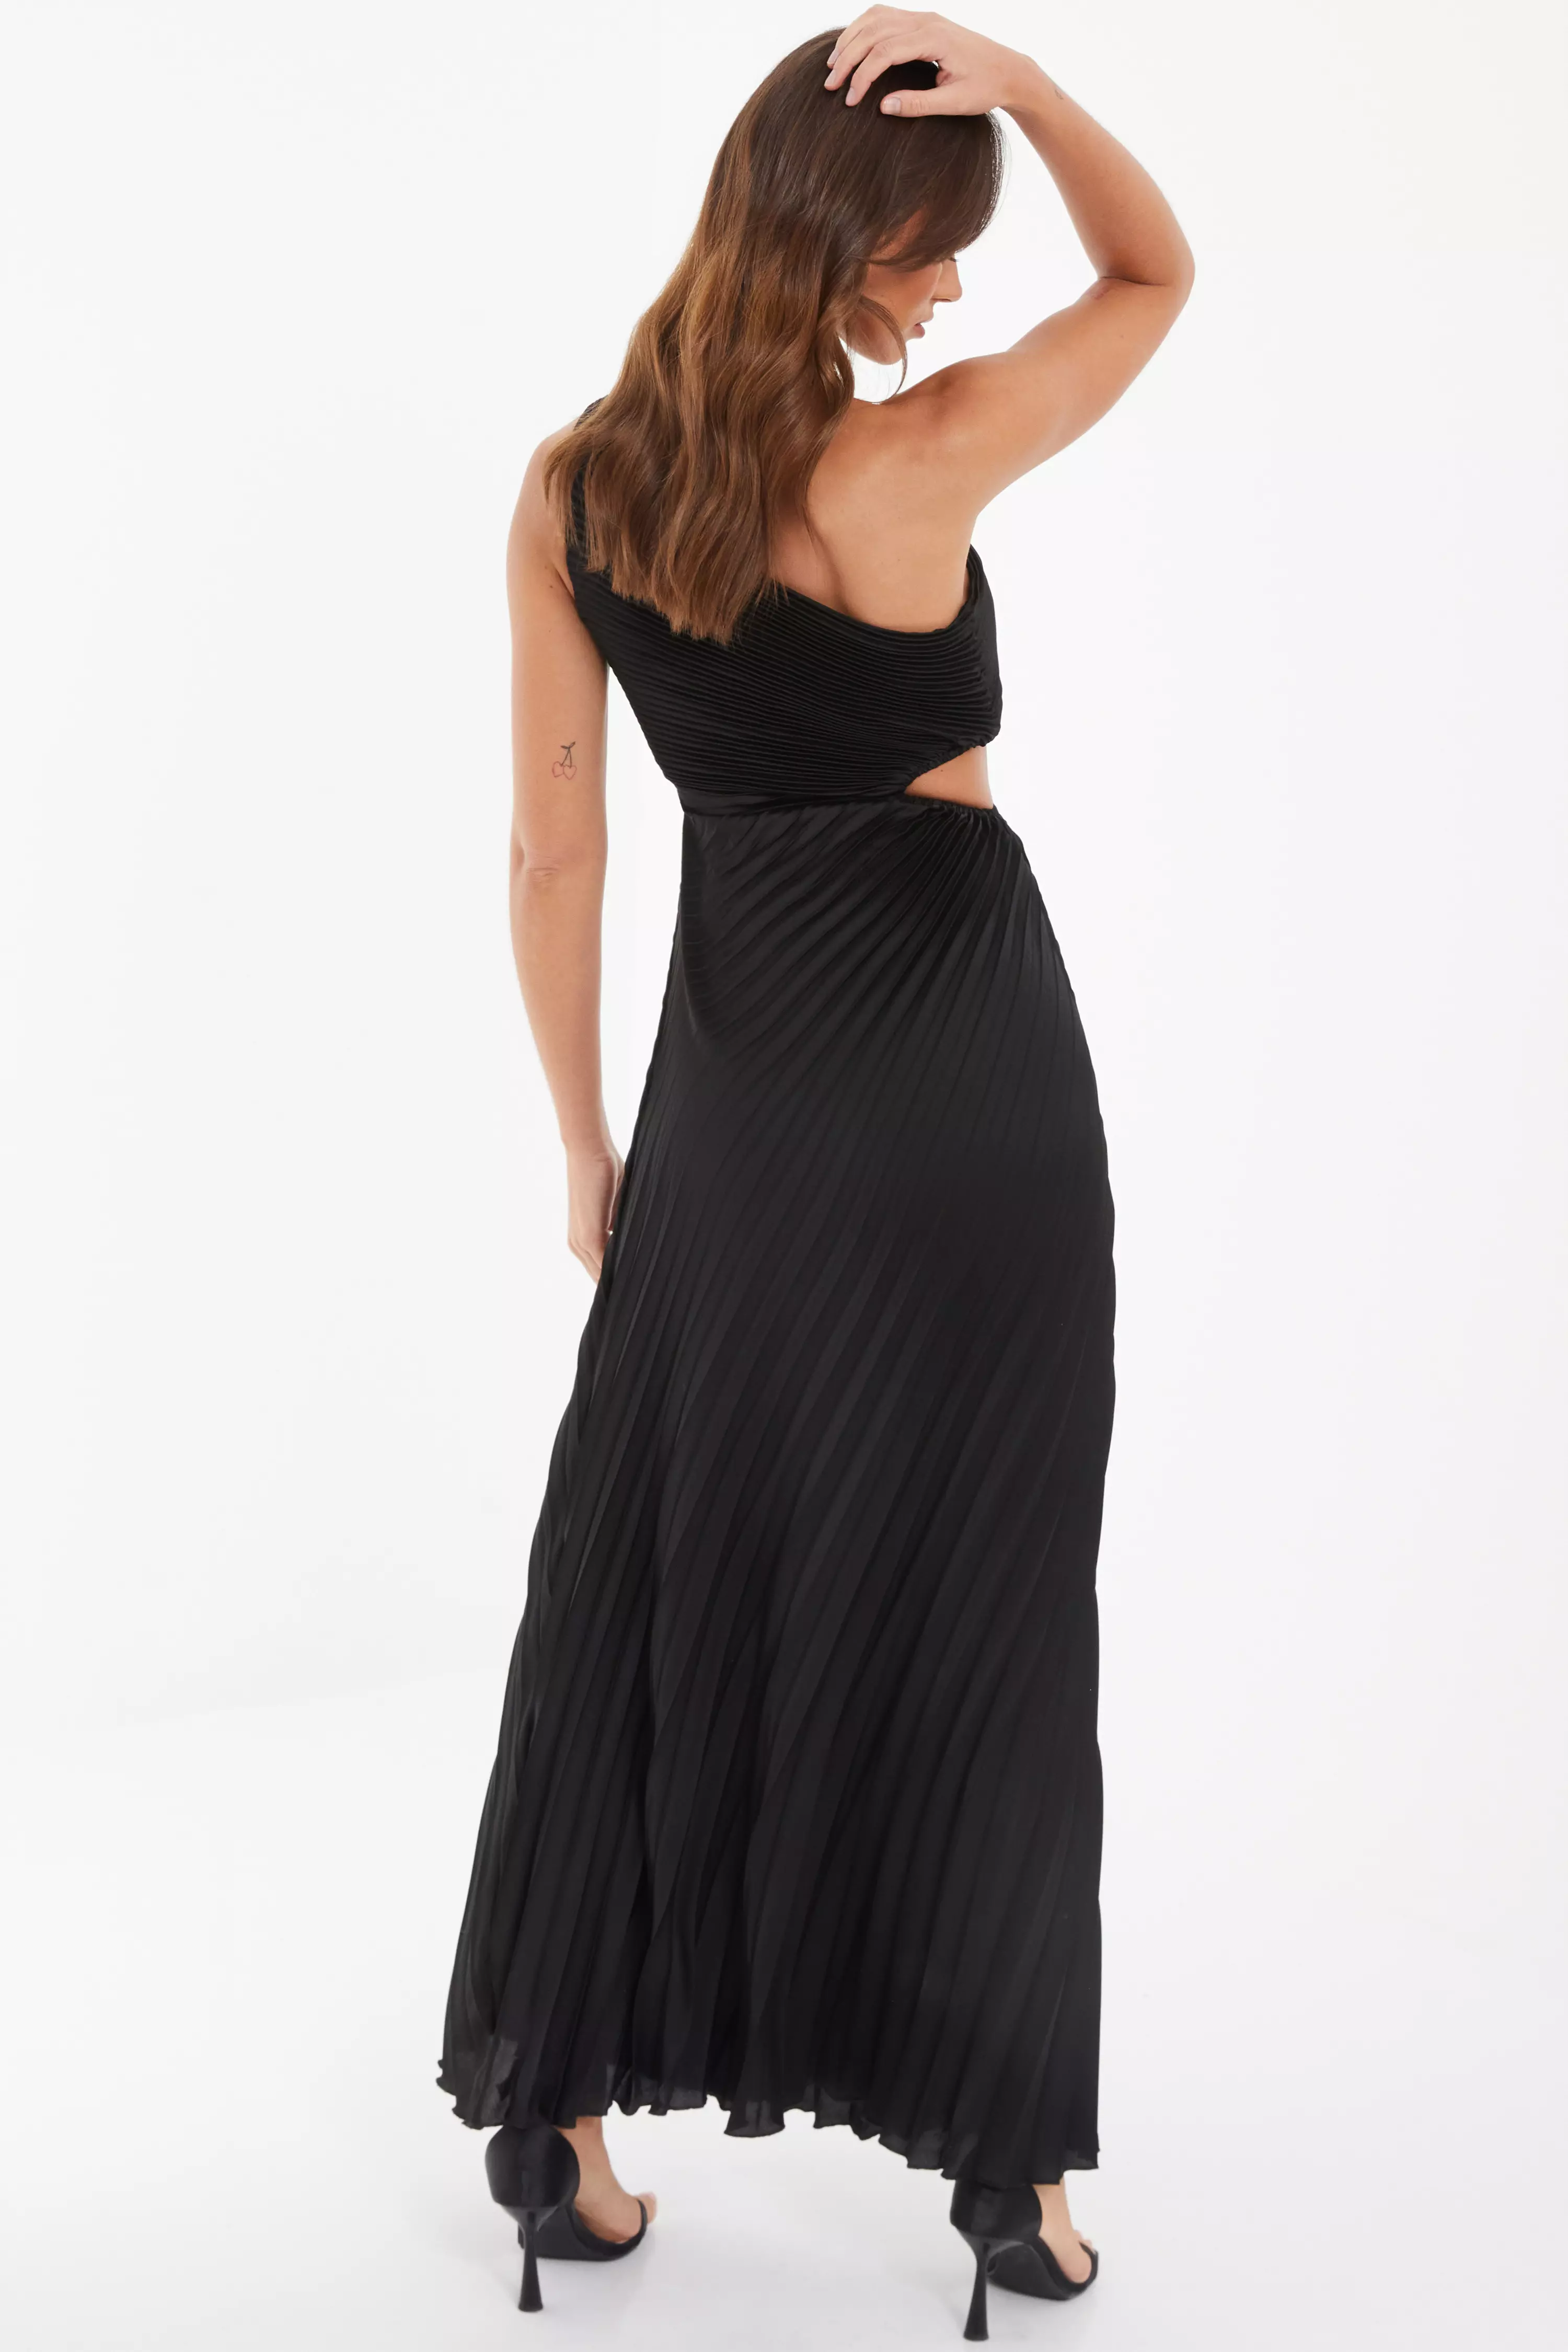 Black One Shoulder Pleated Maxi Dress - QUIZ Clothing